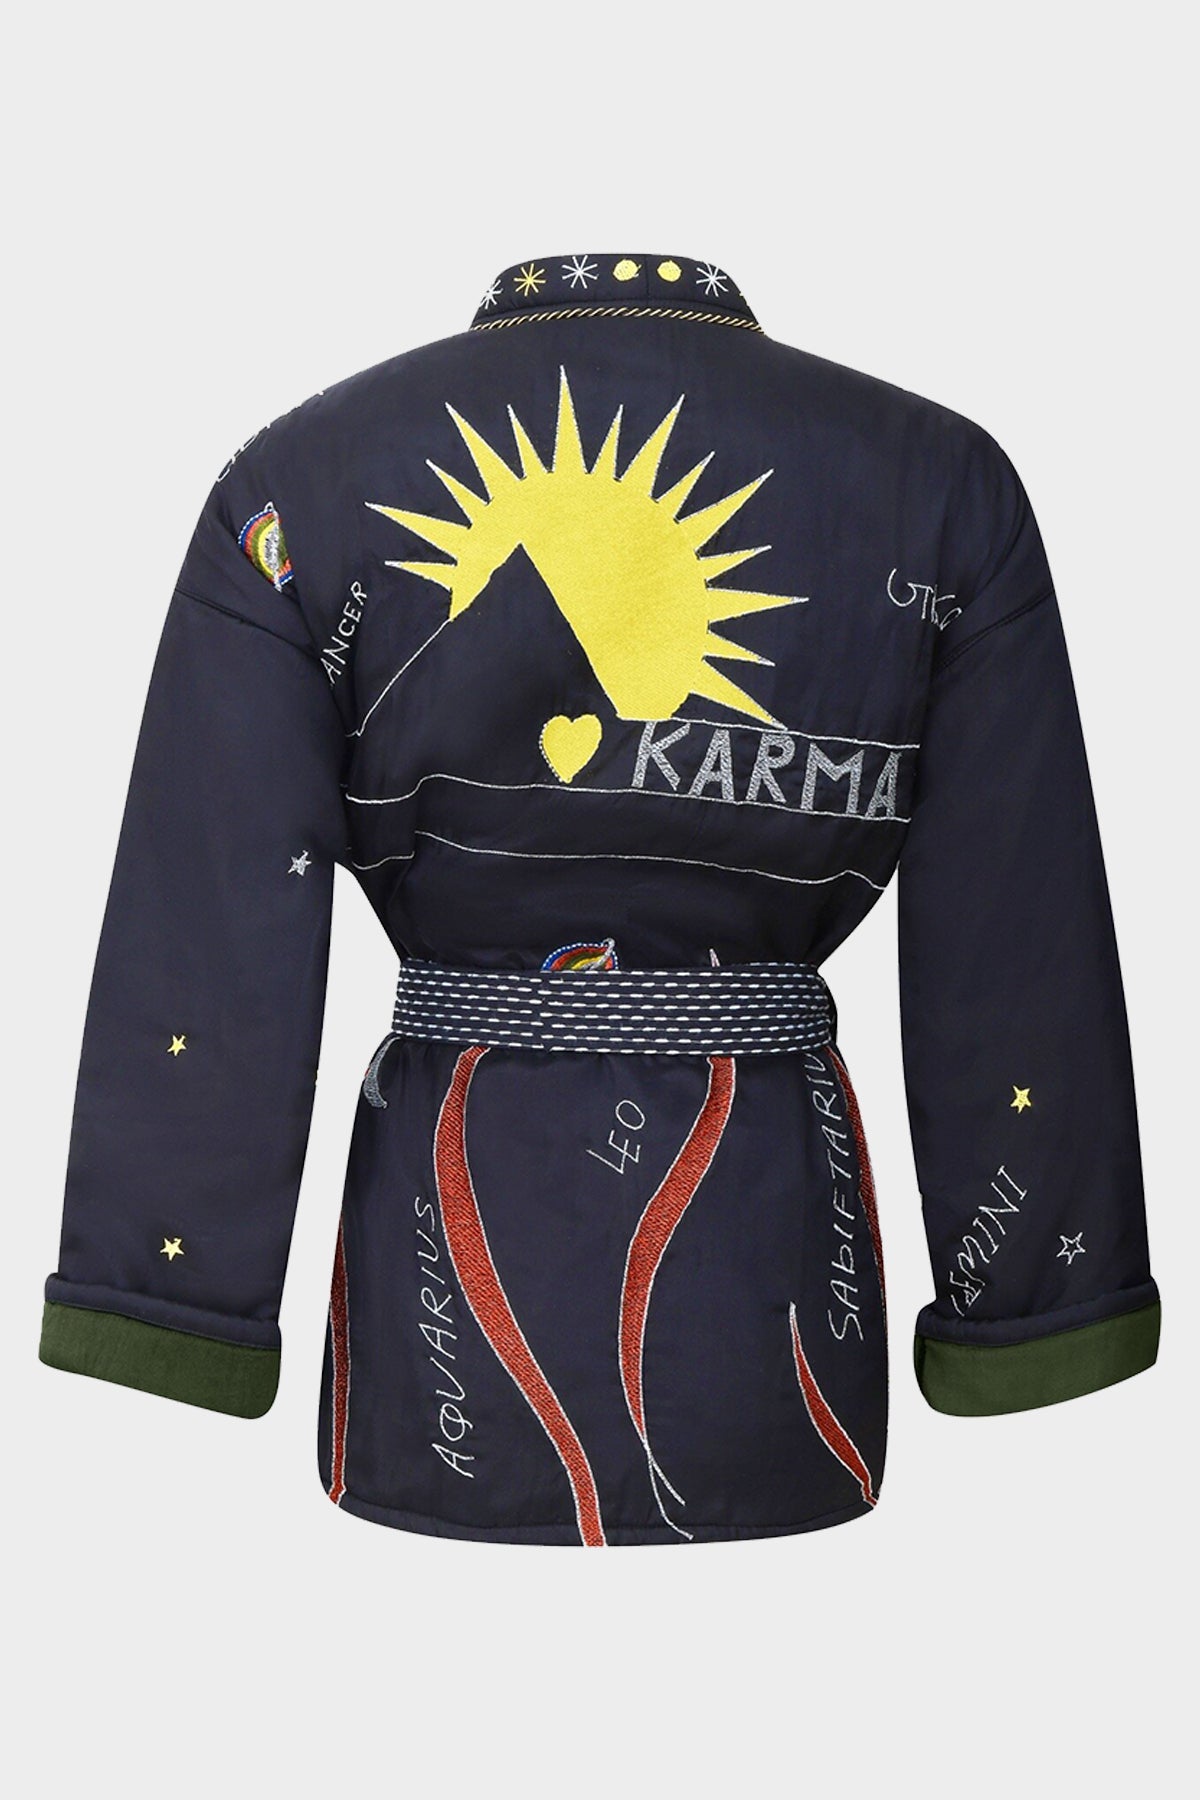 Karma Silk Kimono in Black - shop-olivia.com